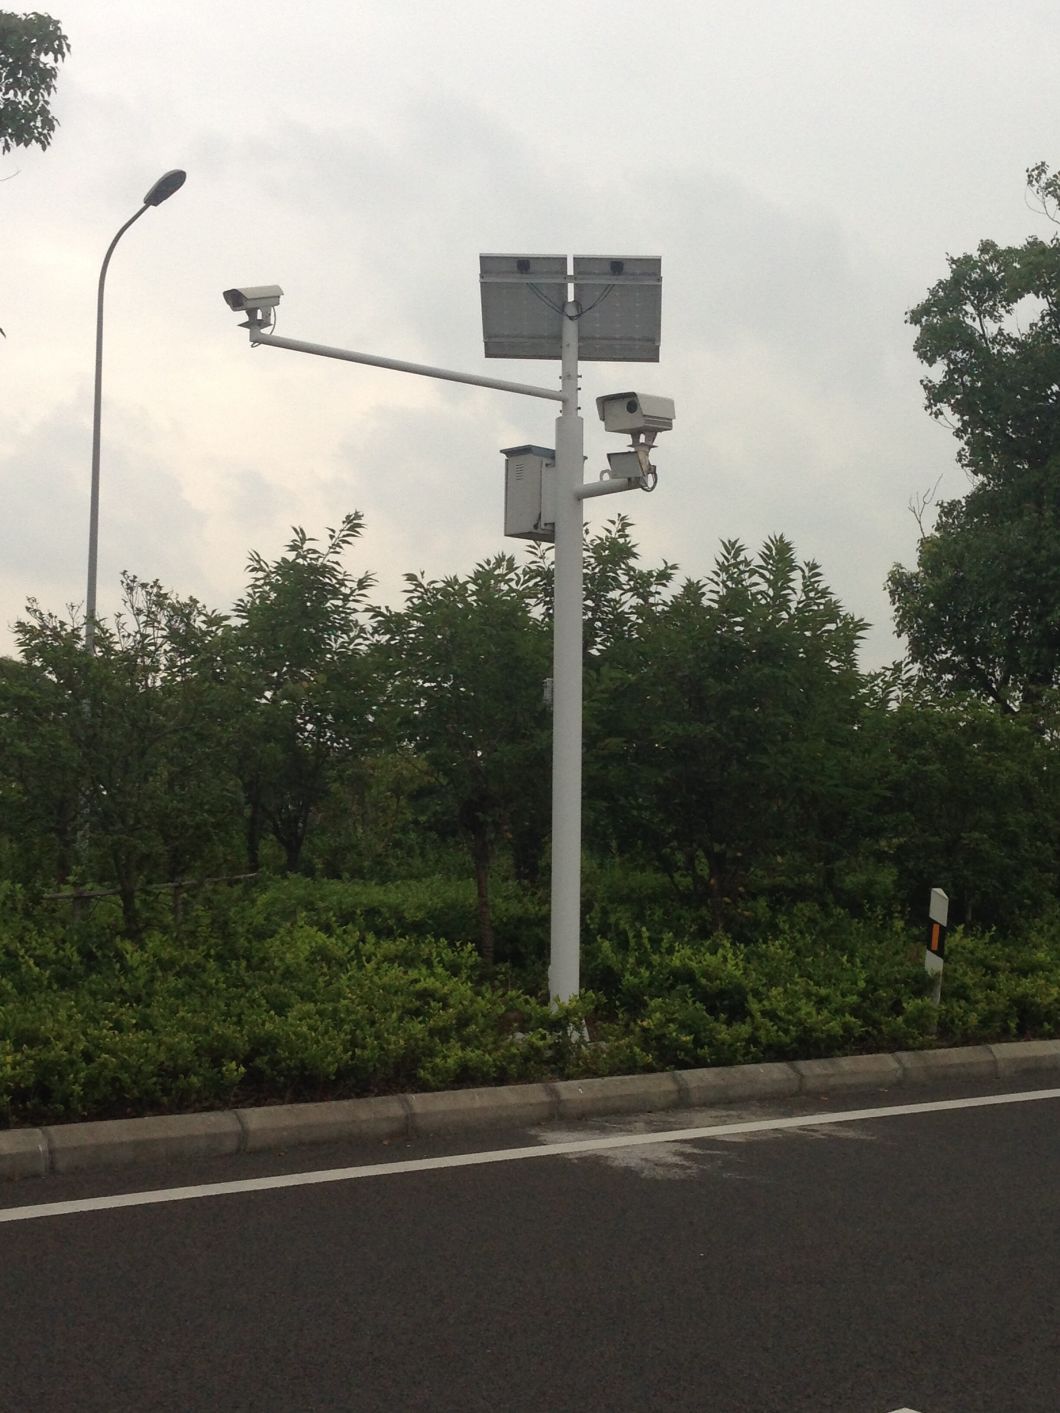 Radar Trafic Speed Detective PTZ Camera for Vehicle Speeding (SHJ-HT3000-D)